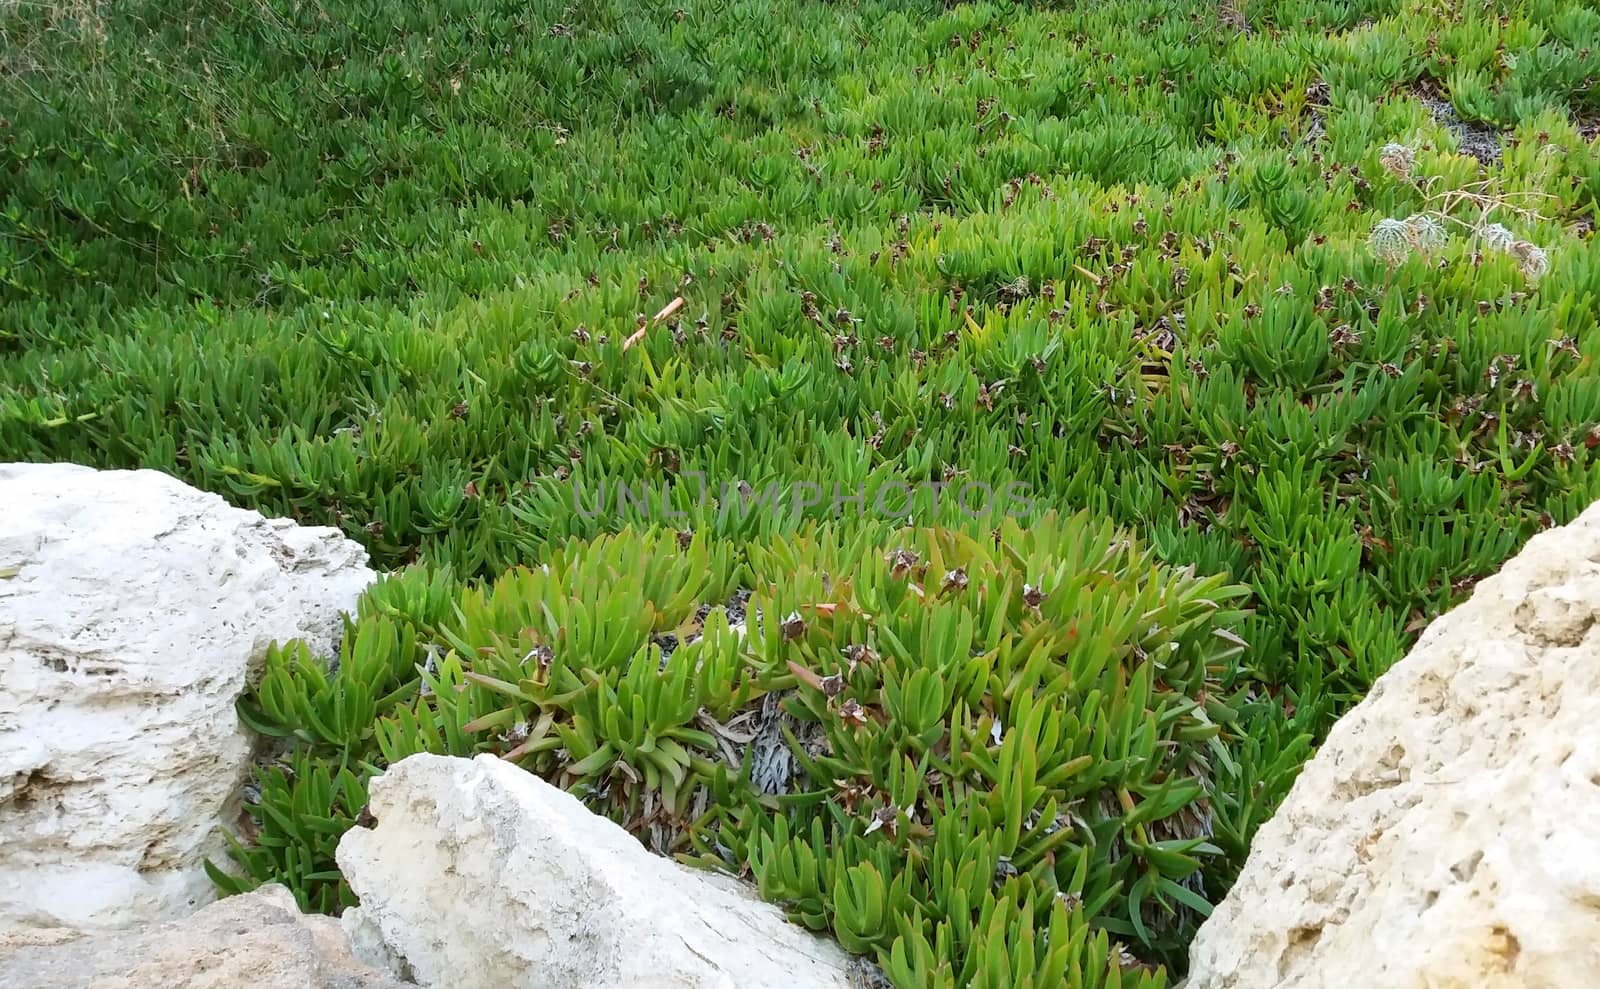 Carpobrotus Edulis, Carpet of plants growing on the rocks in Greece